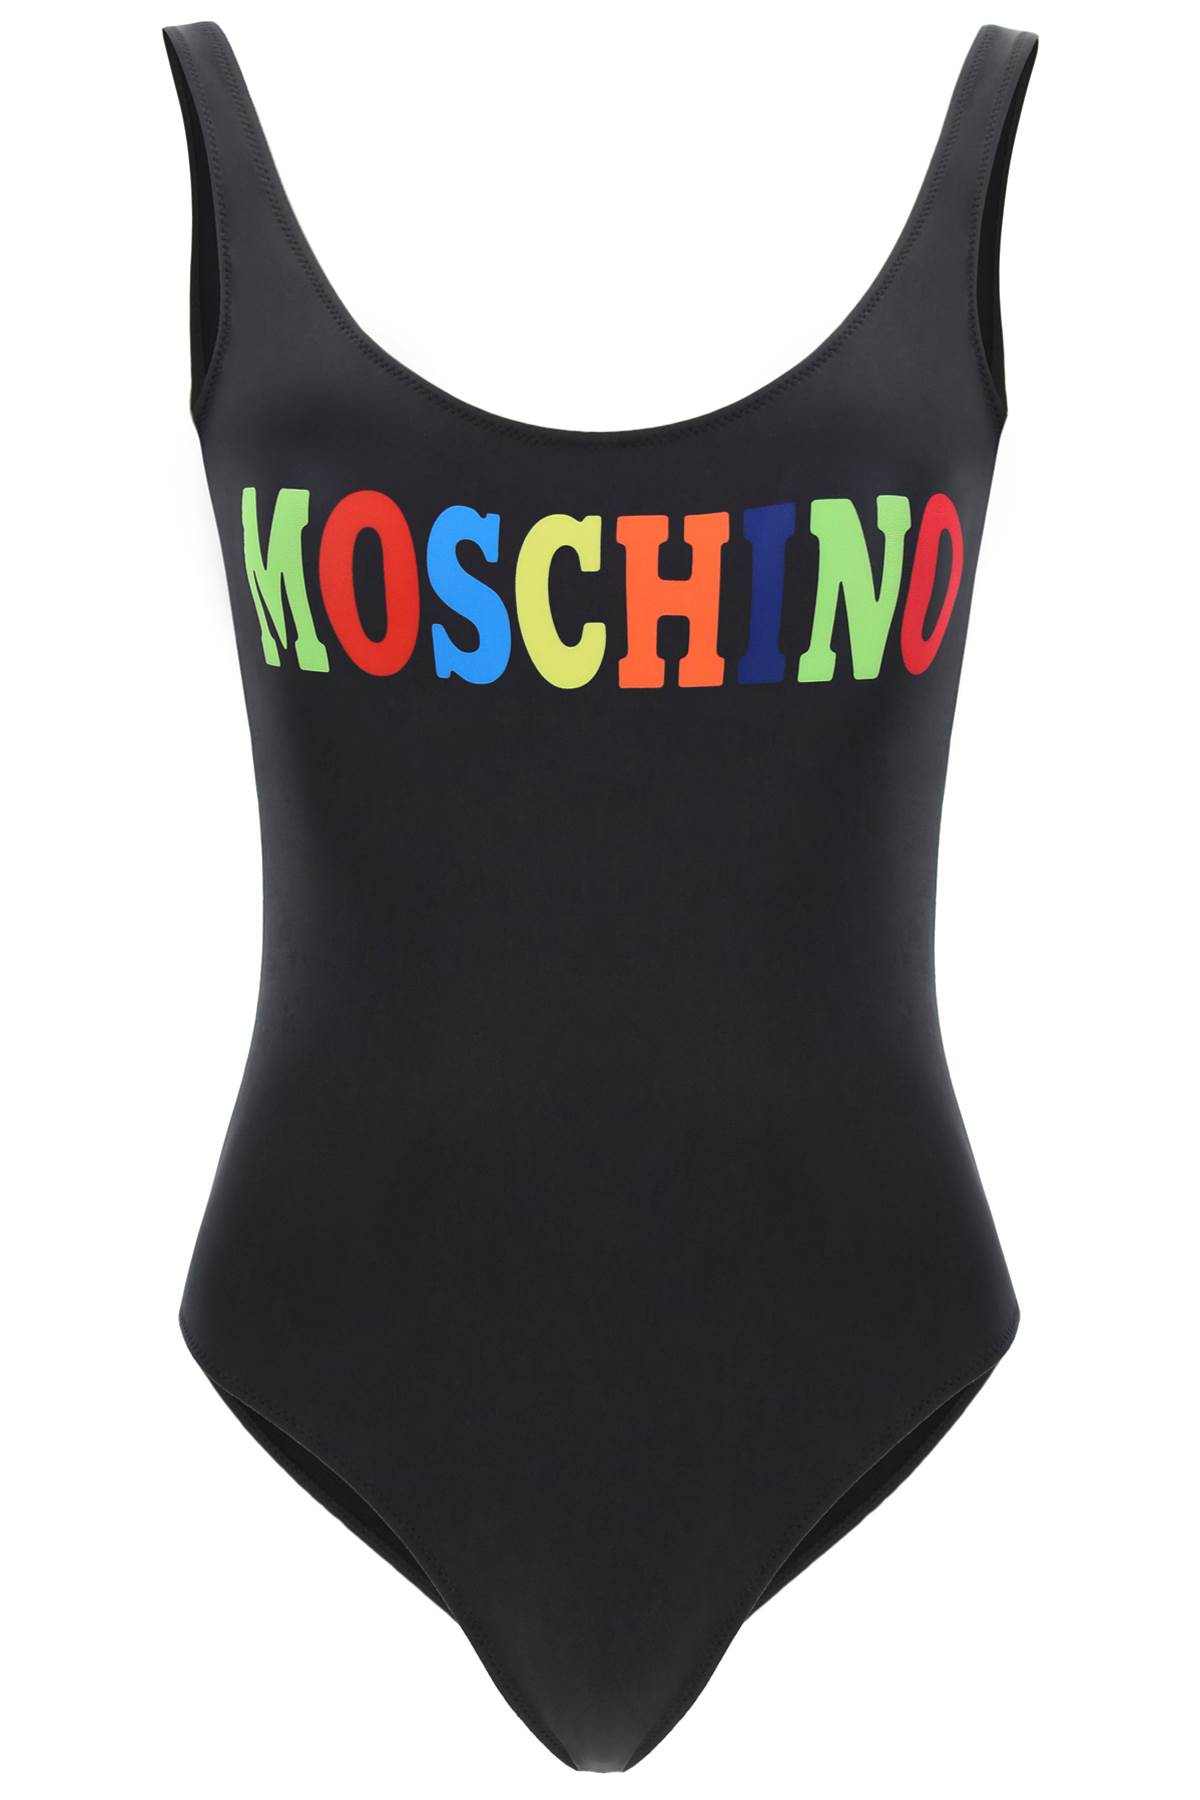 Moschino Multicoloured Logo Swimsuit